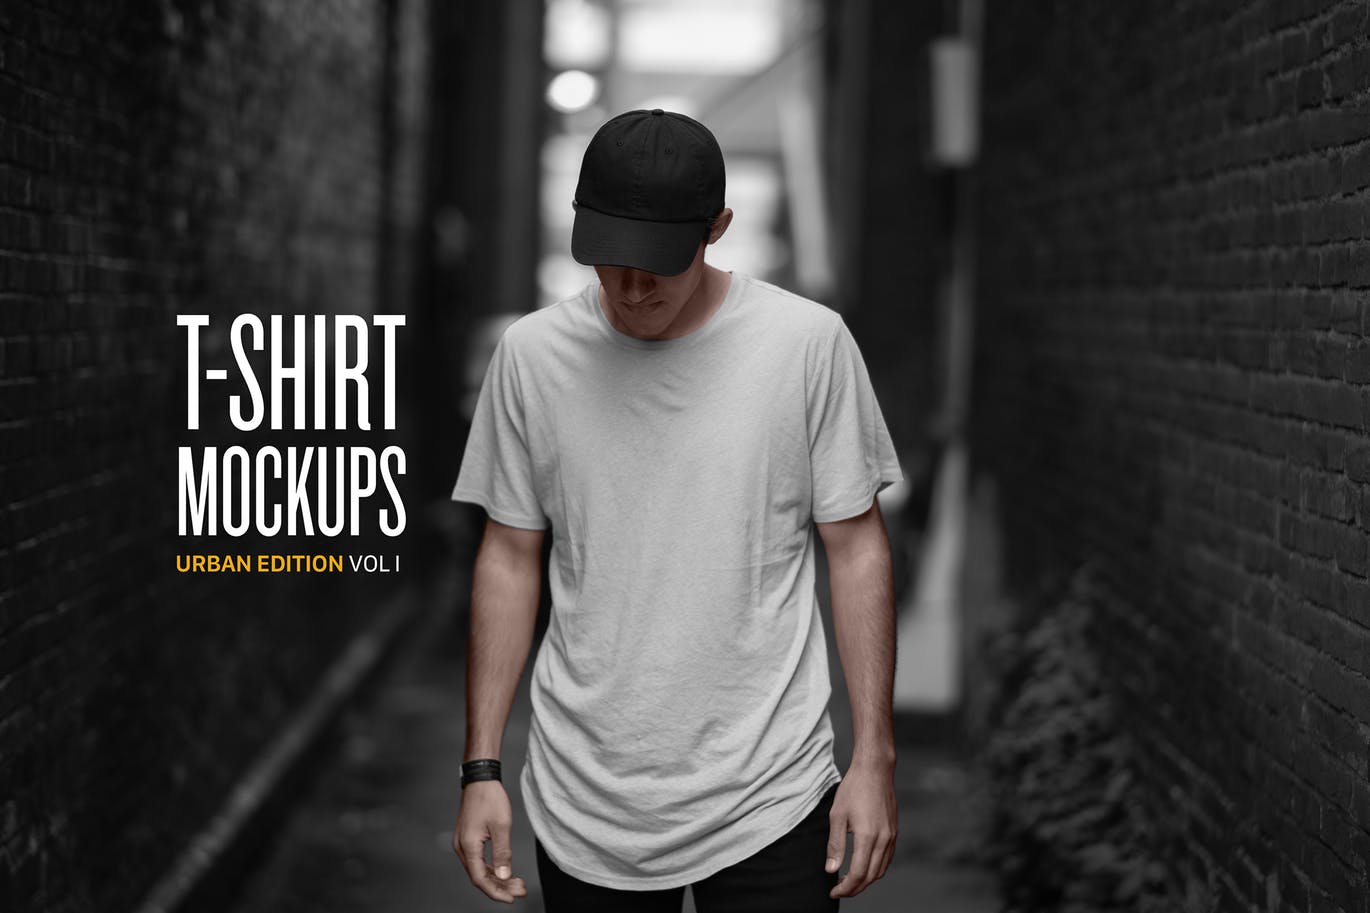 经典款男士T恤设计效果图样机 T-Shirt Mockups插图